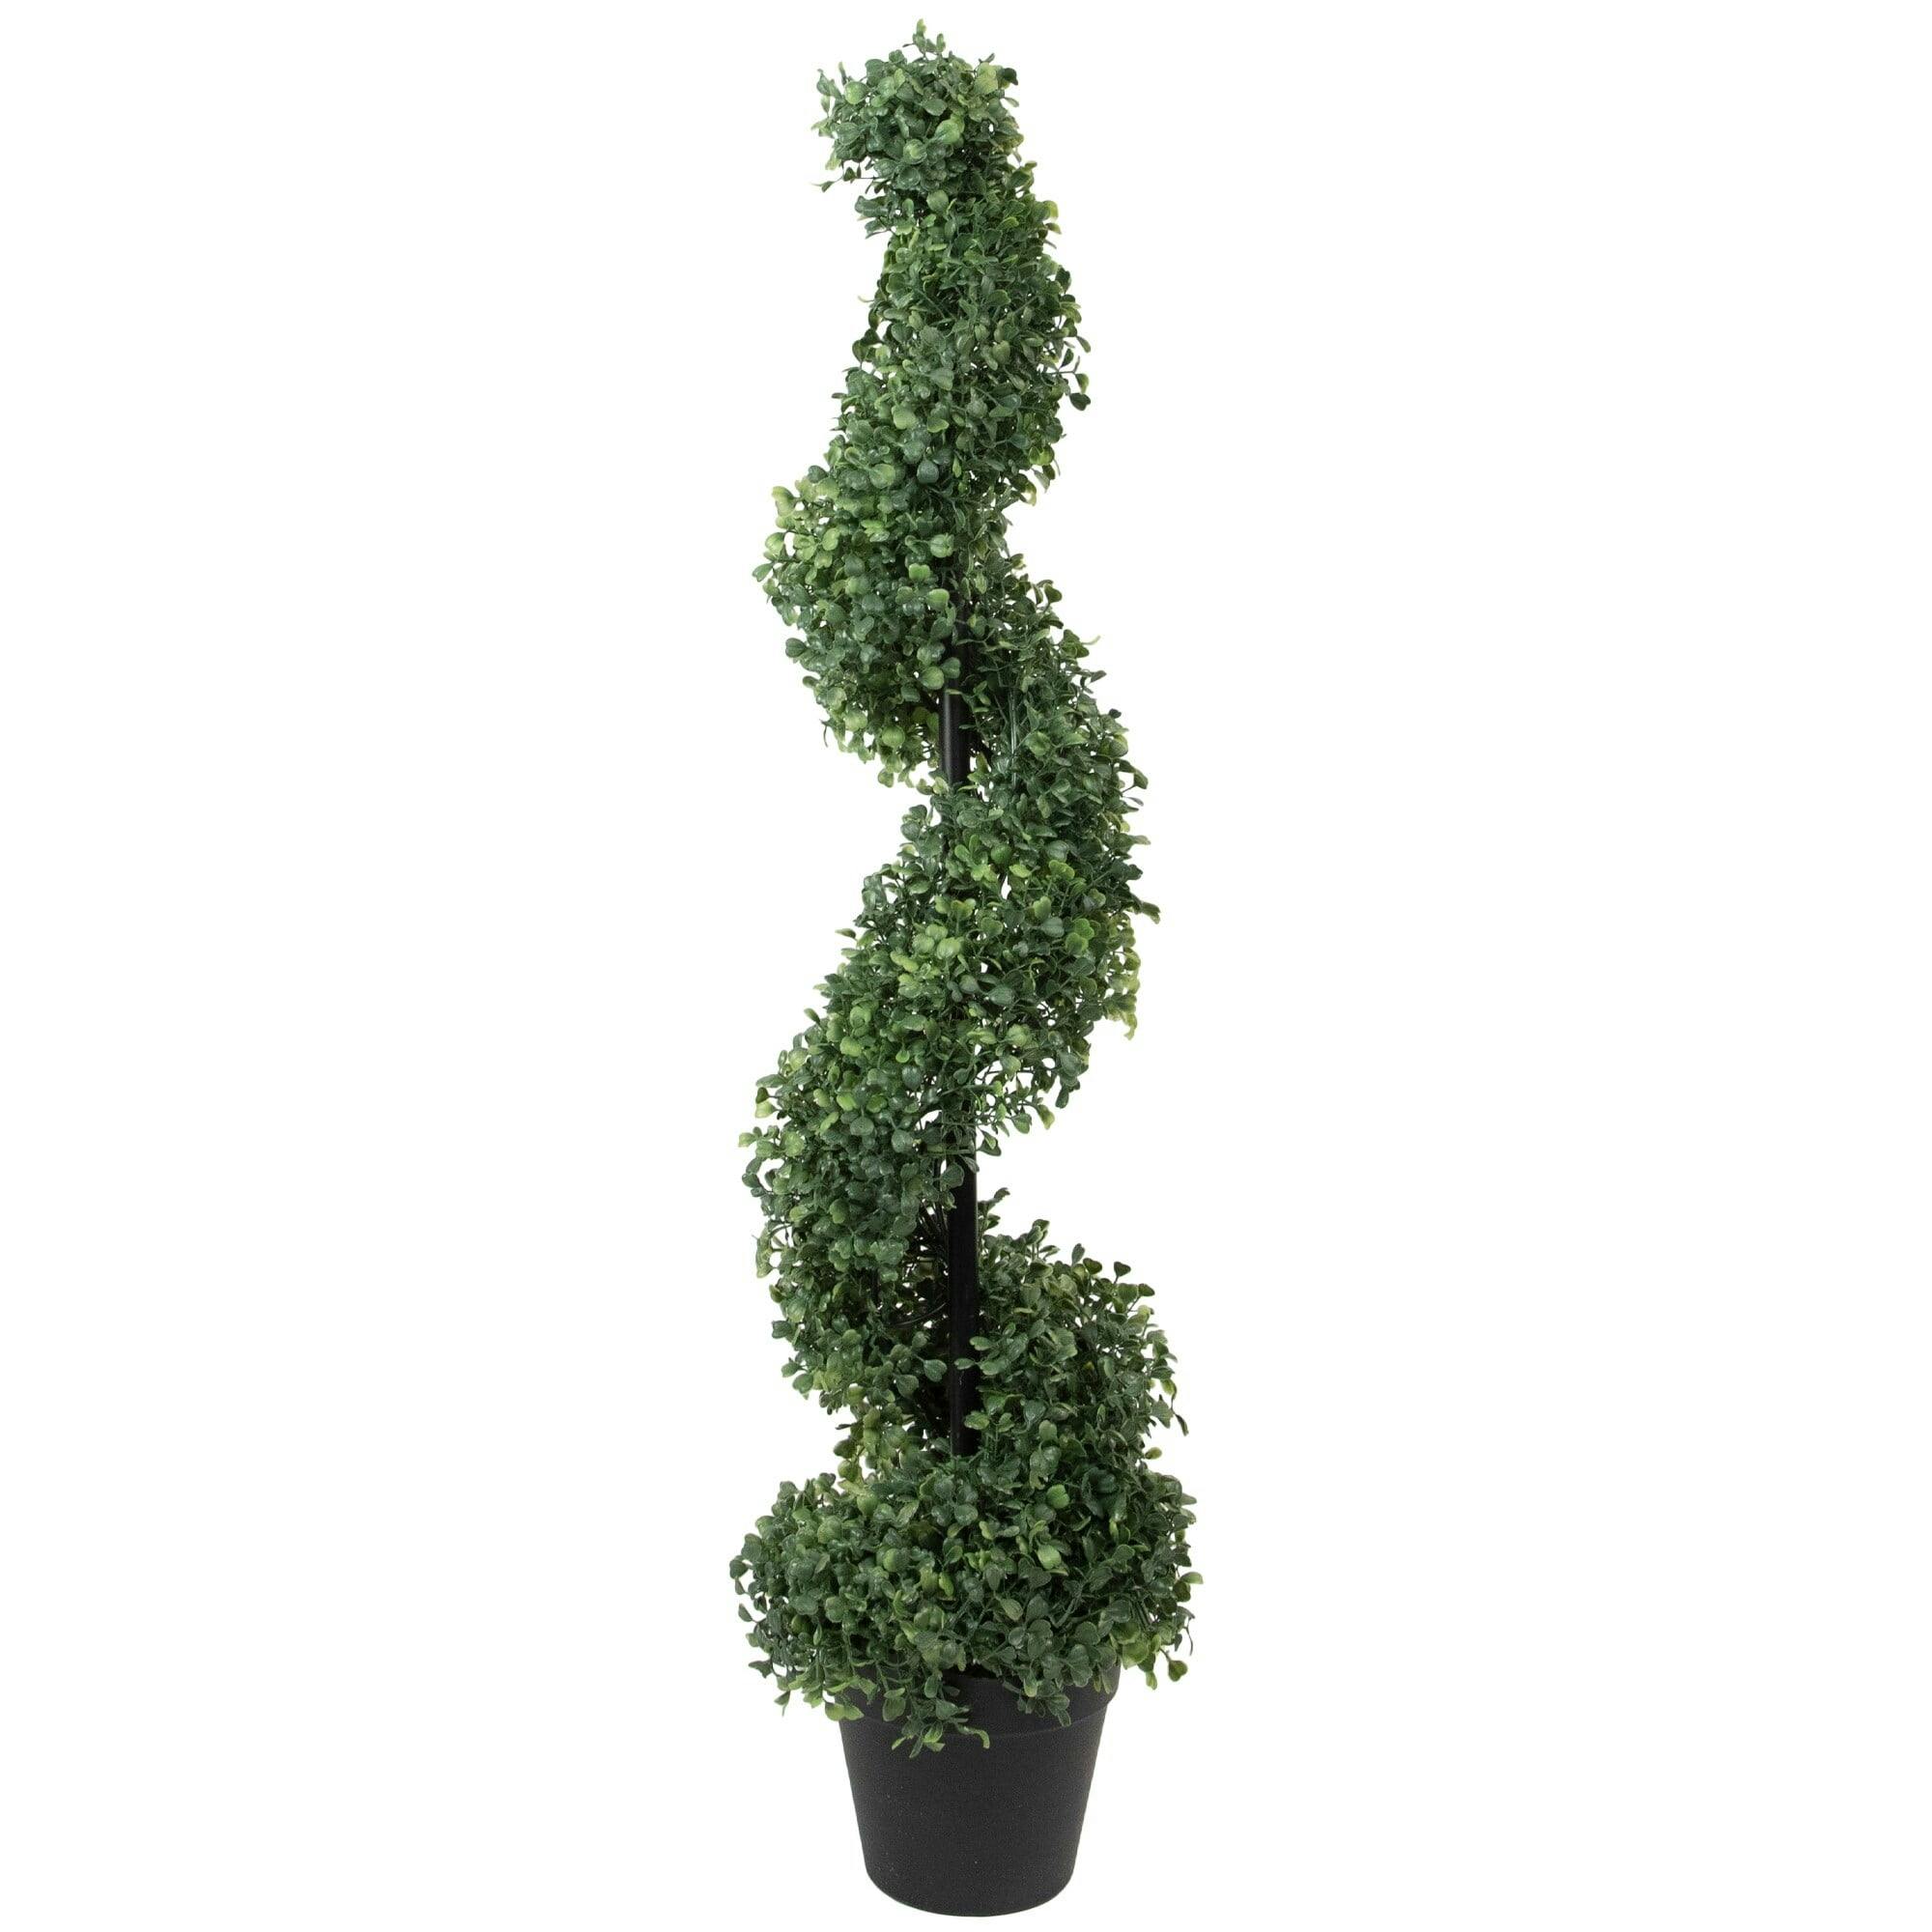 Elegant Two-Tone Boxwood Spiral Topiary, 38" Unlit with Black Pot